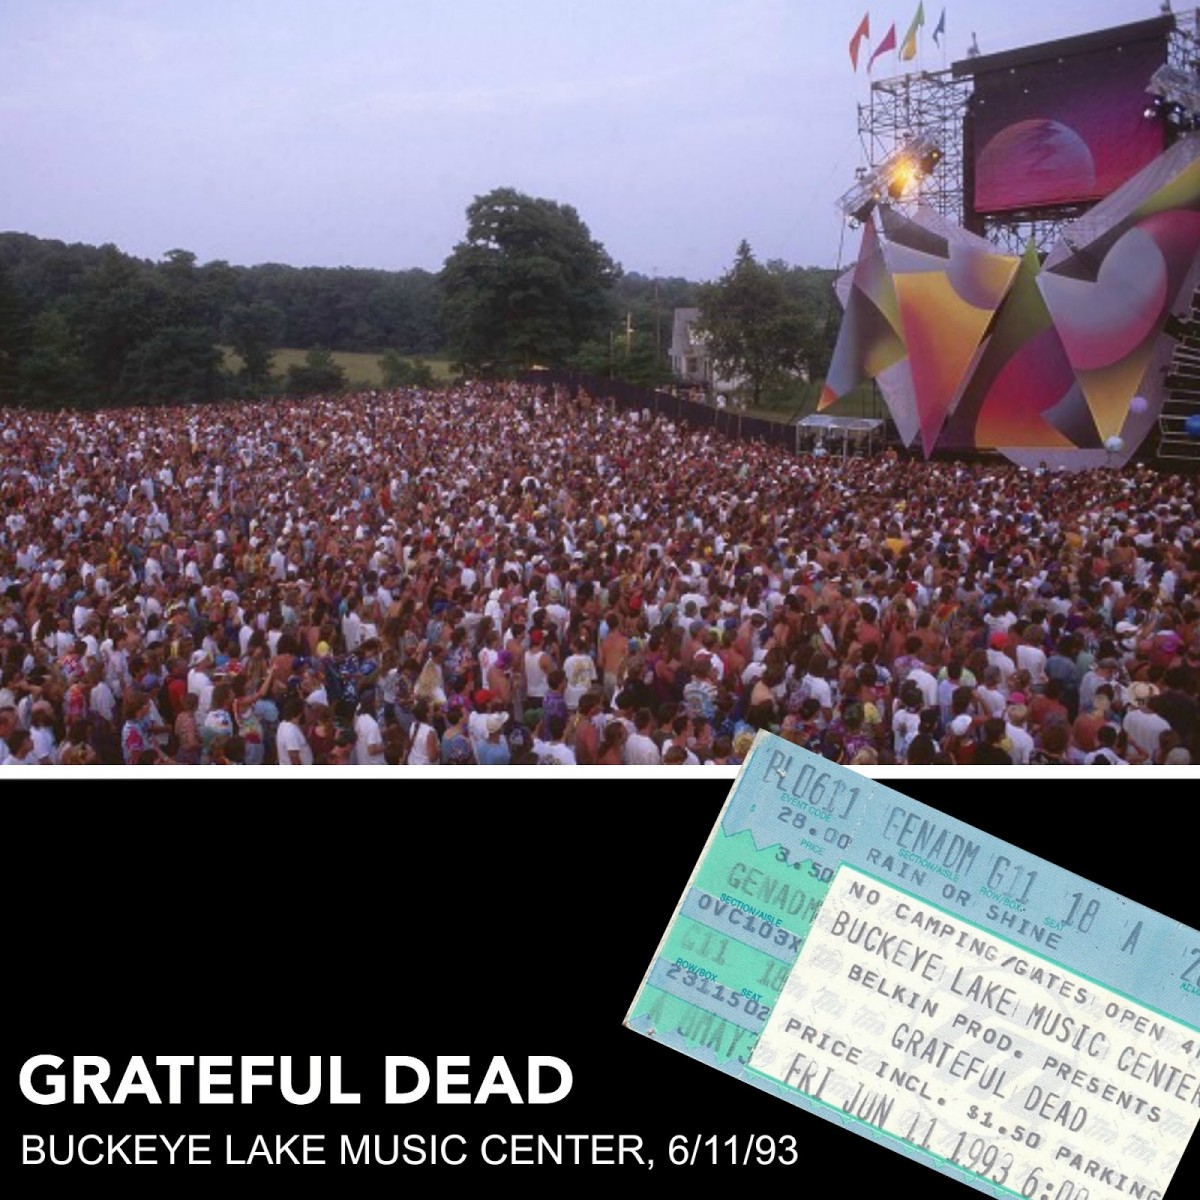 Dark Star Orchestra to Recreate Epic Grateful Dead ’93 Buckeye Lake Show at Same Venue During Dark Star Jubilee Festival; Festival Schedule Announced